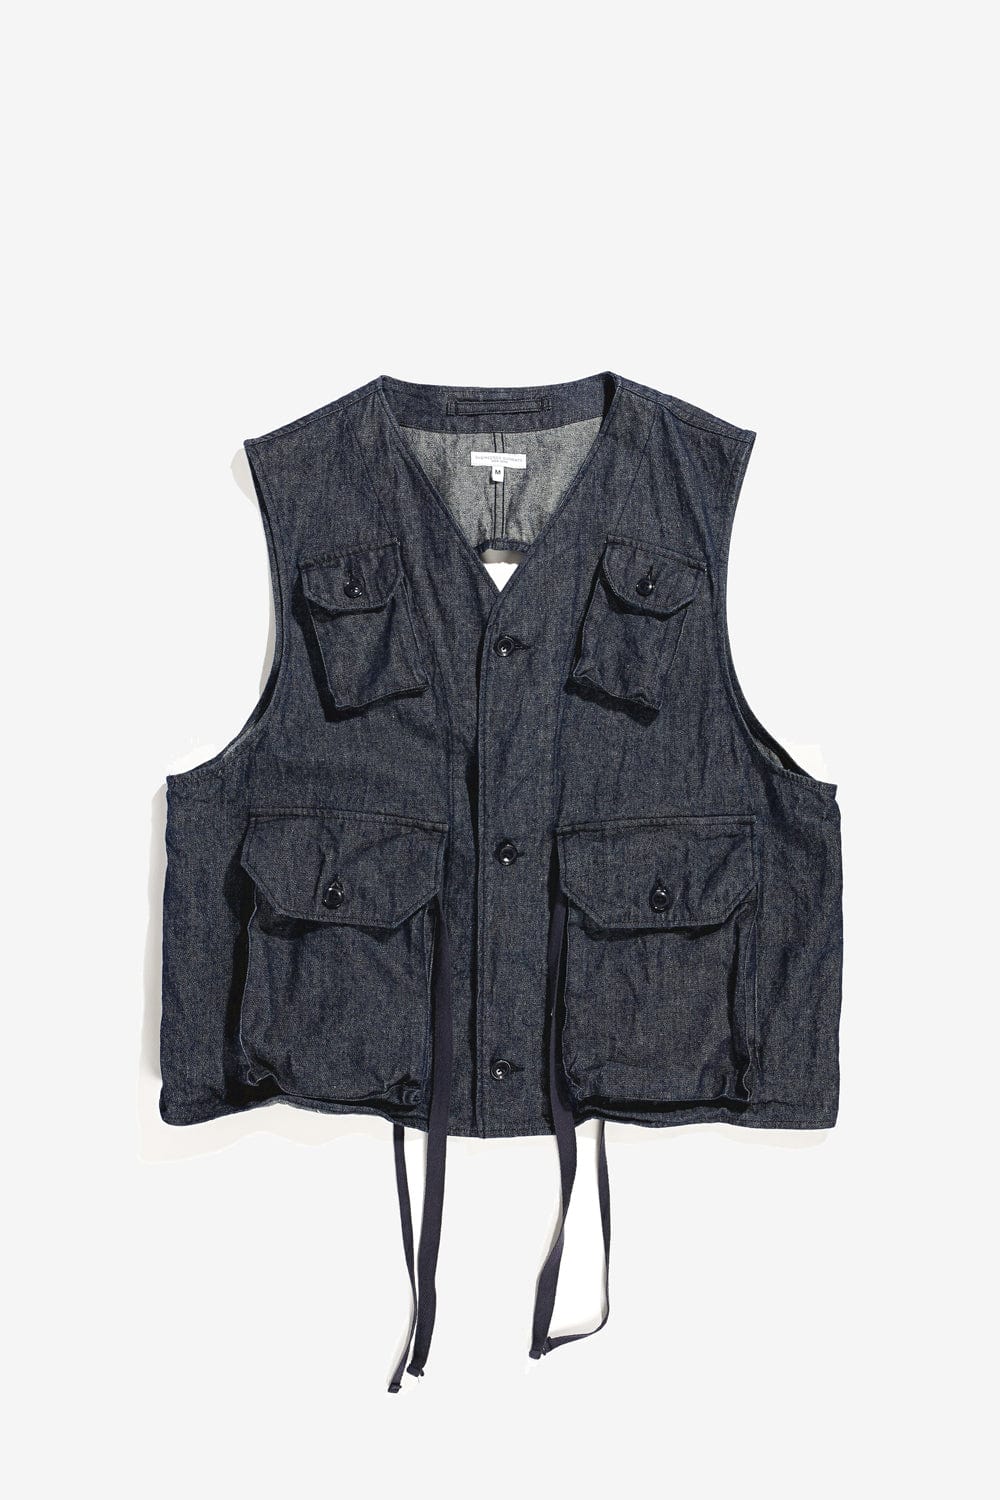 Engineered Garments C-1 Vest (Indigo Industrial 8oz Denim)